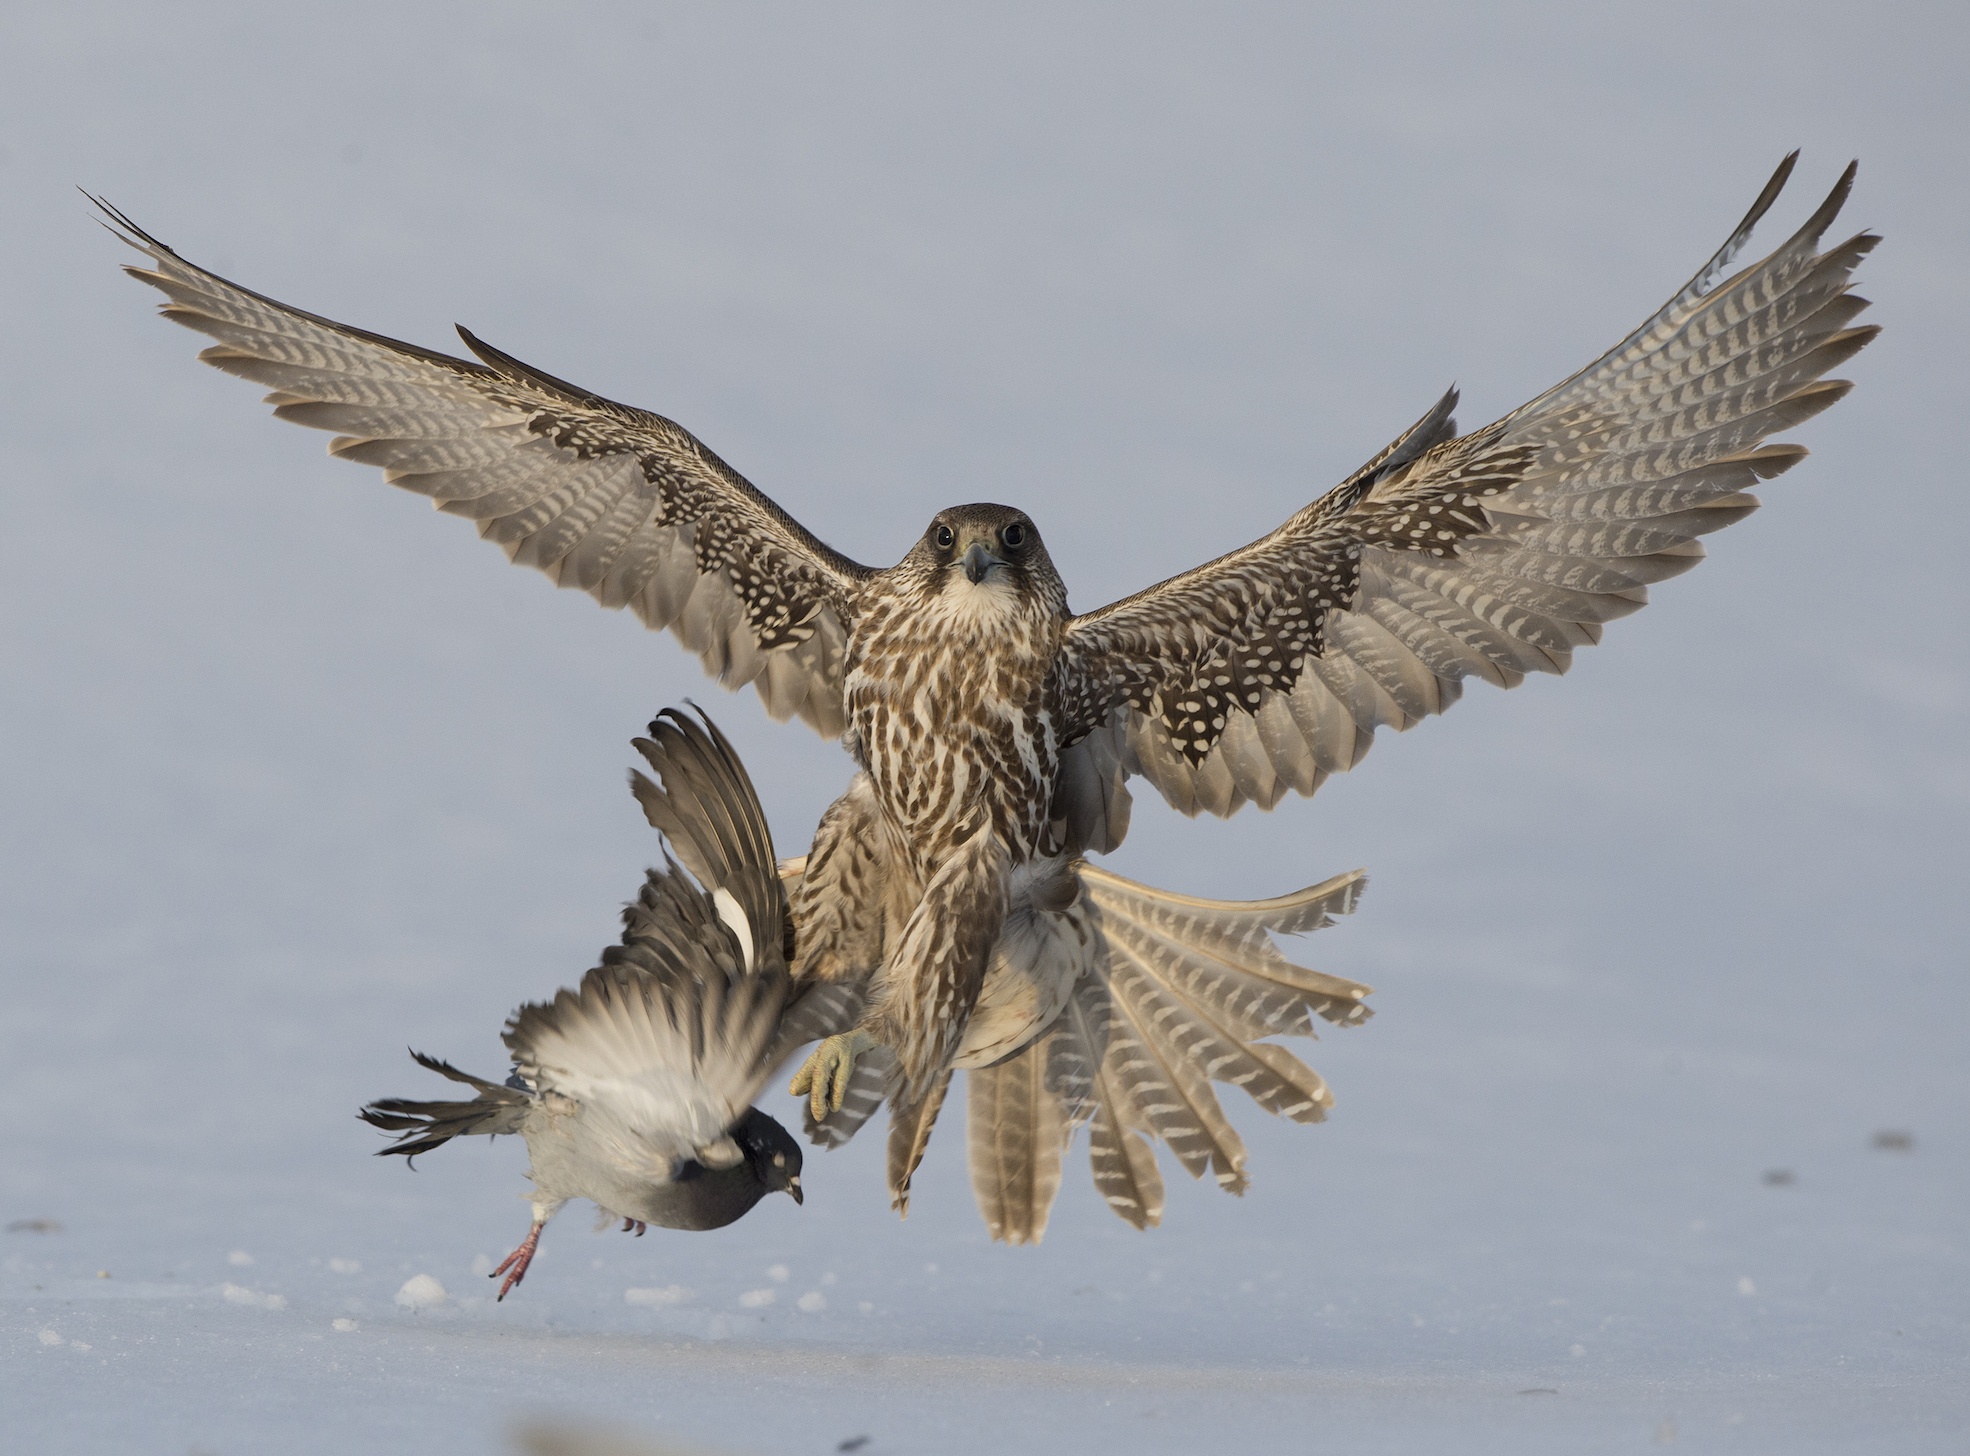 Jaktfalk løfter due. Foto: Stig Frode Olsen